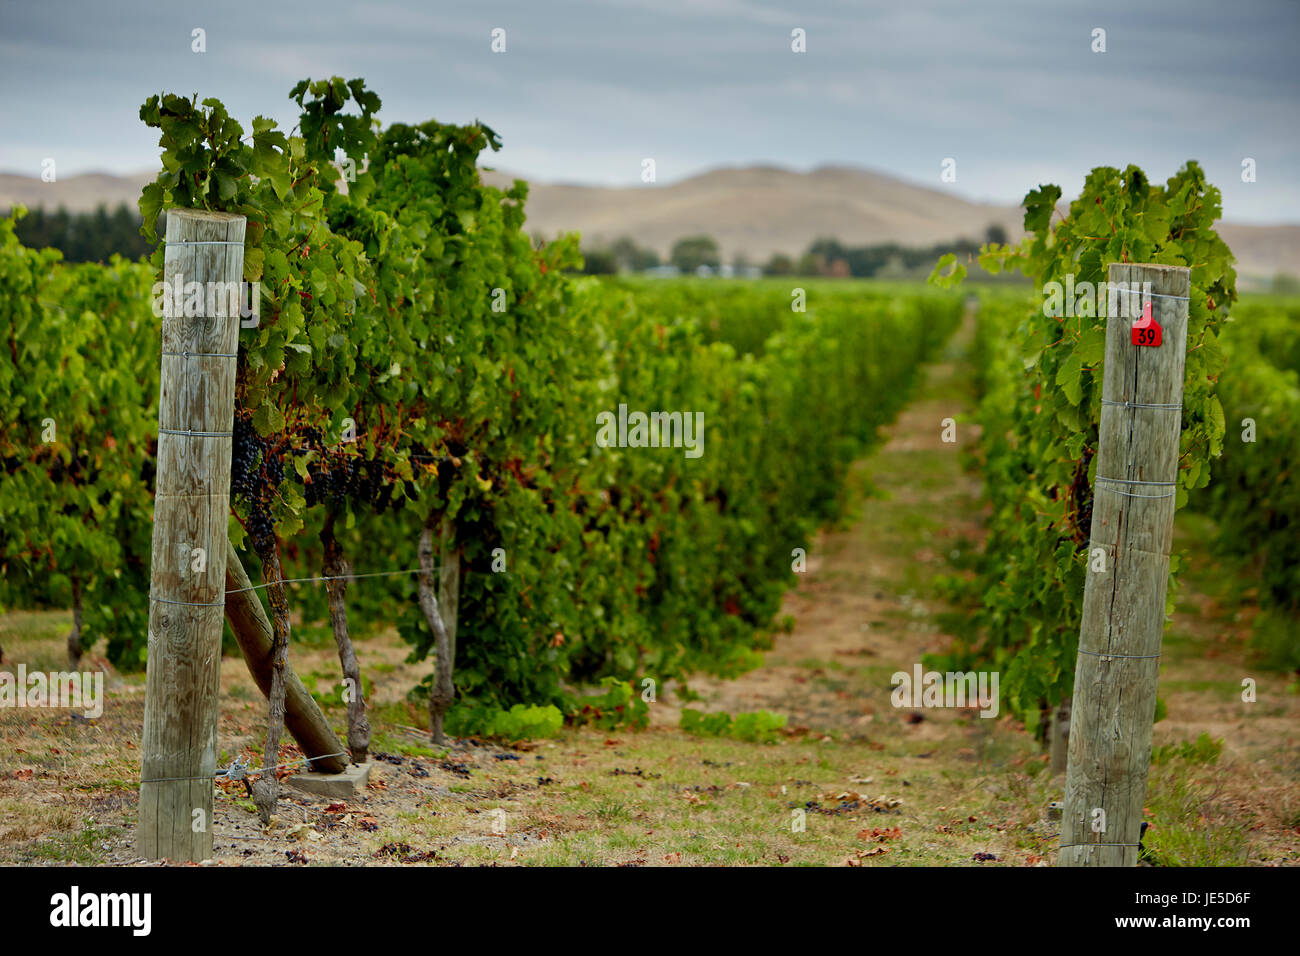 Harvest ready grape vines Stock Photo